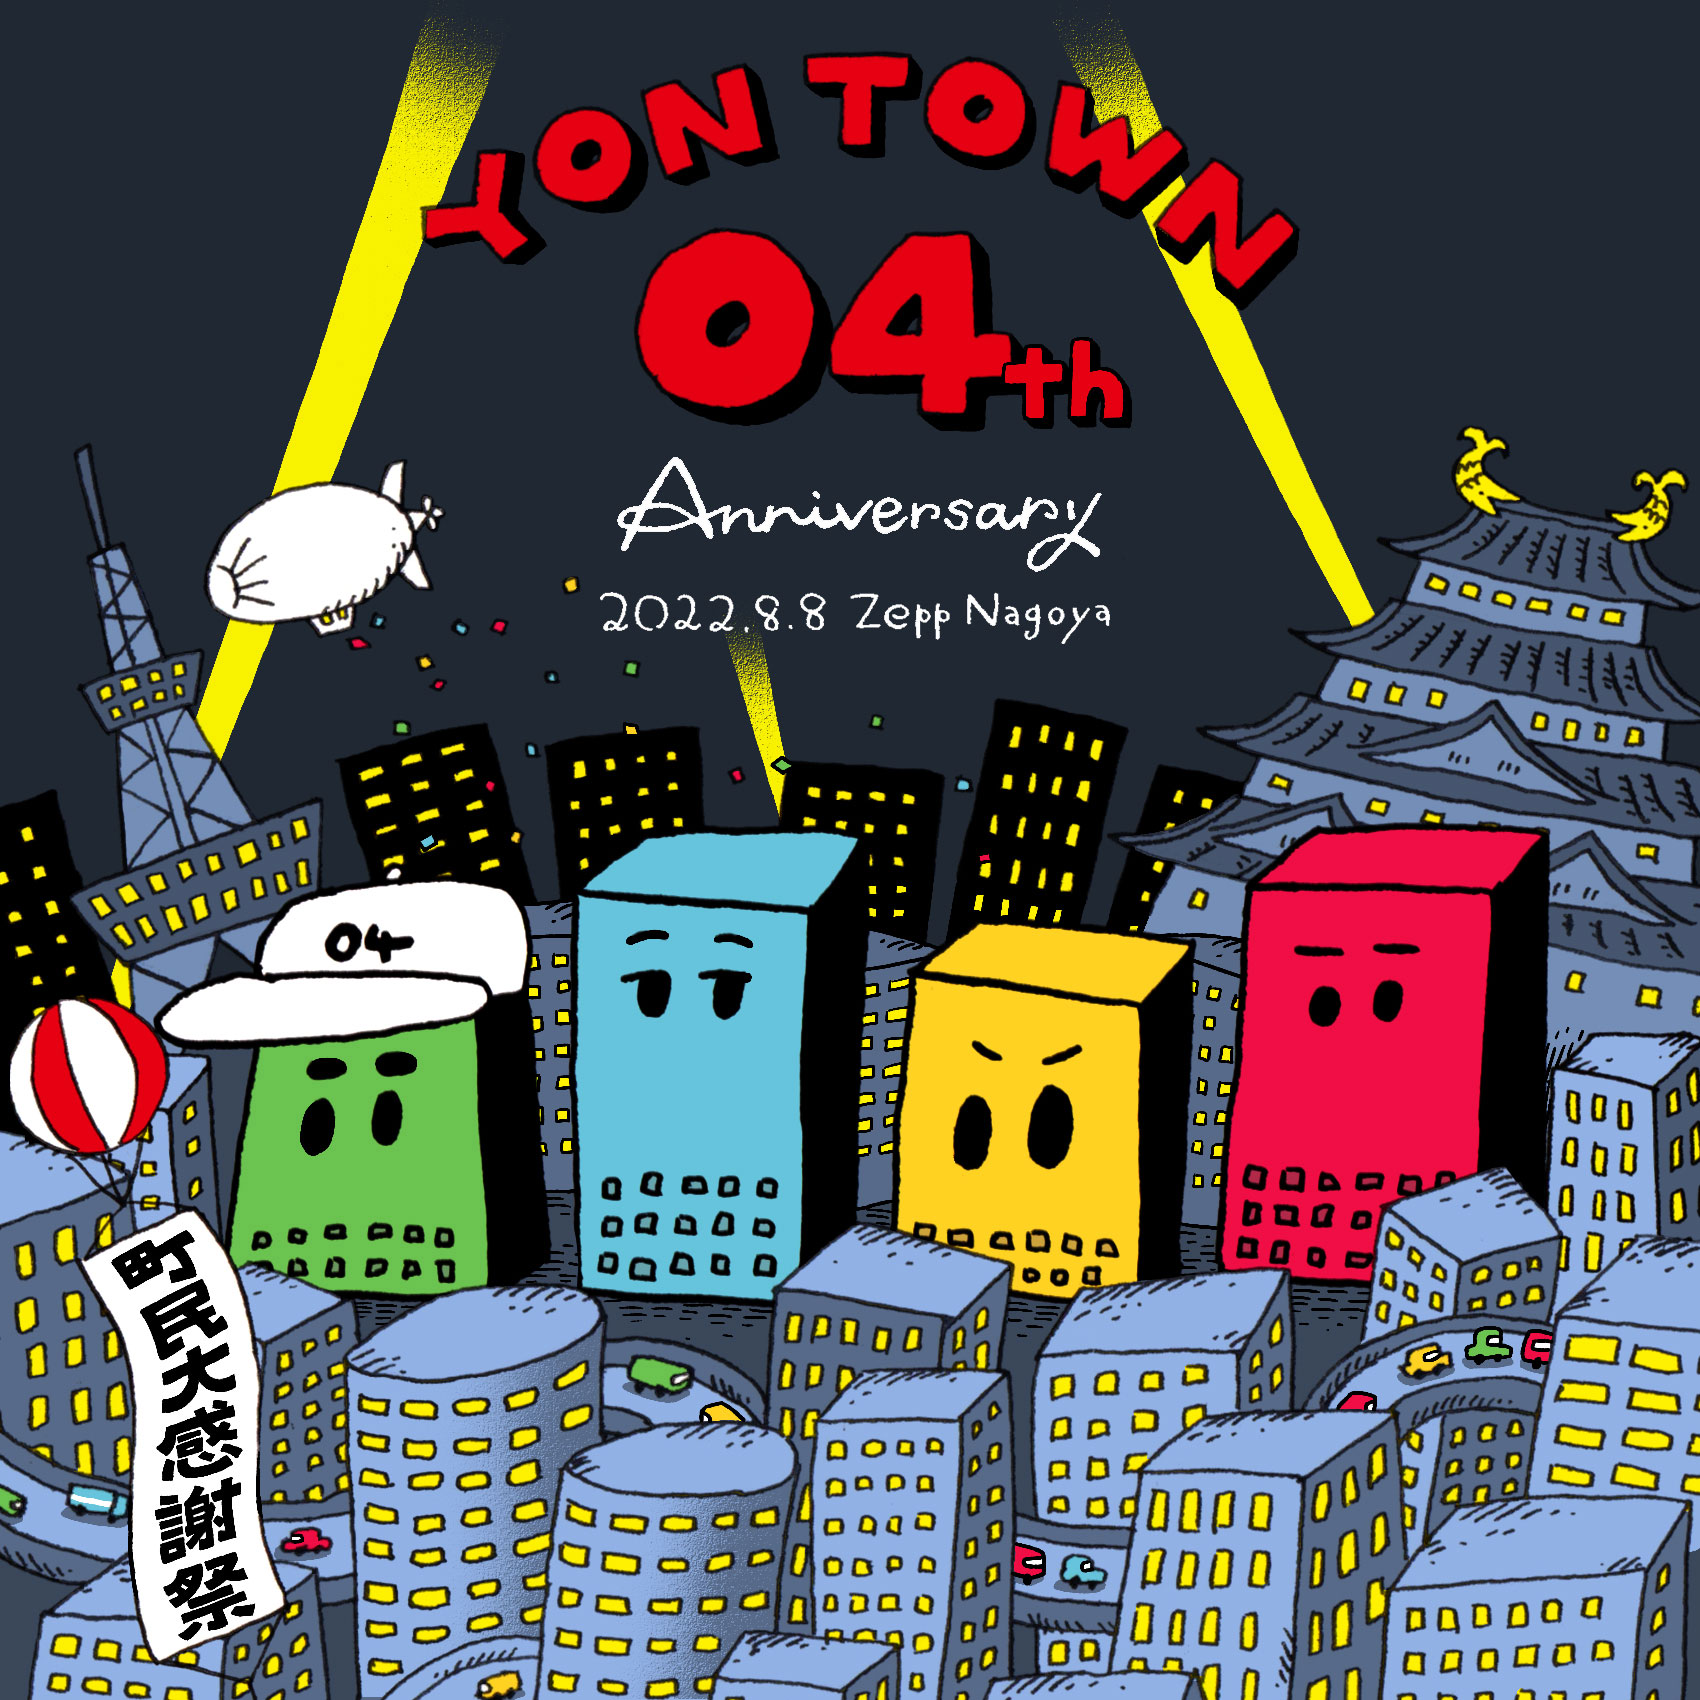 04 limited sazabys フォーリミのYON TOWN TOUR - 通販 - pinehotel.info